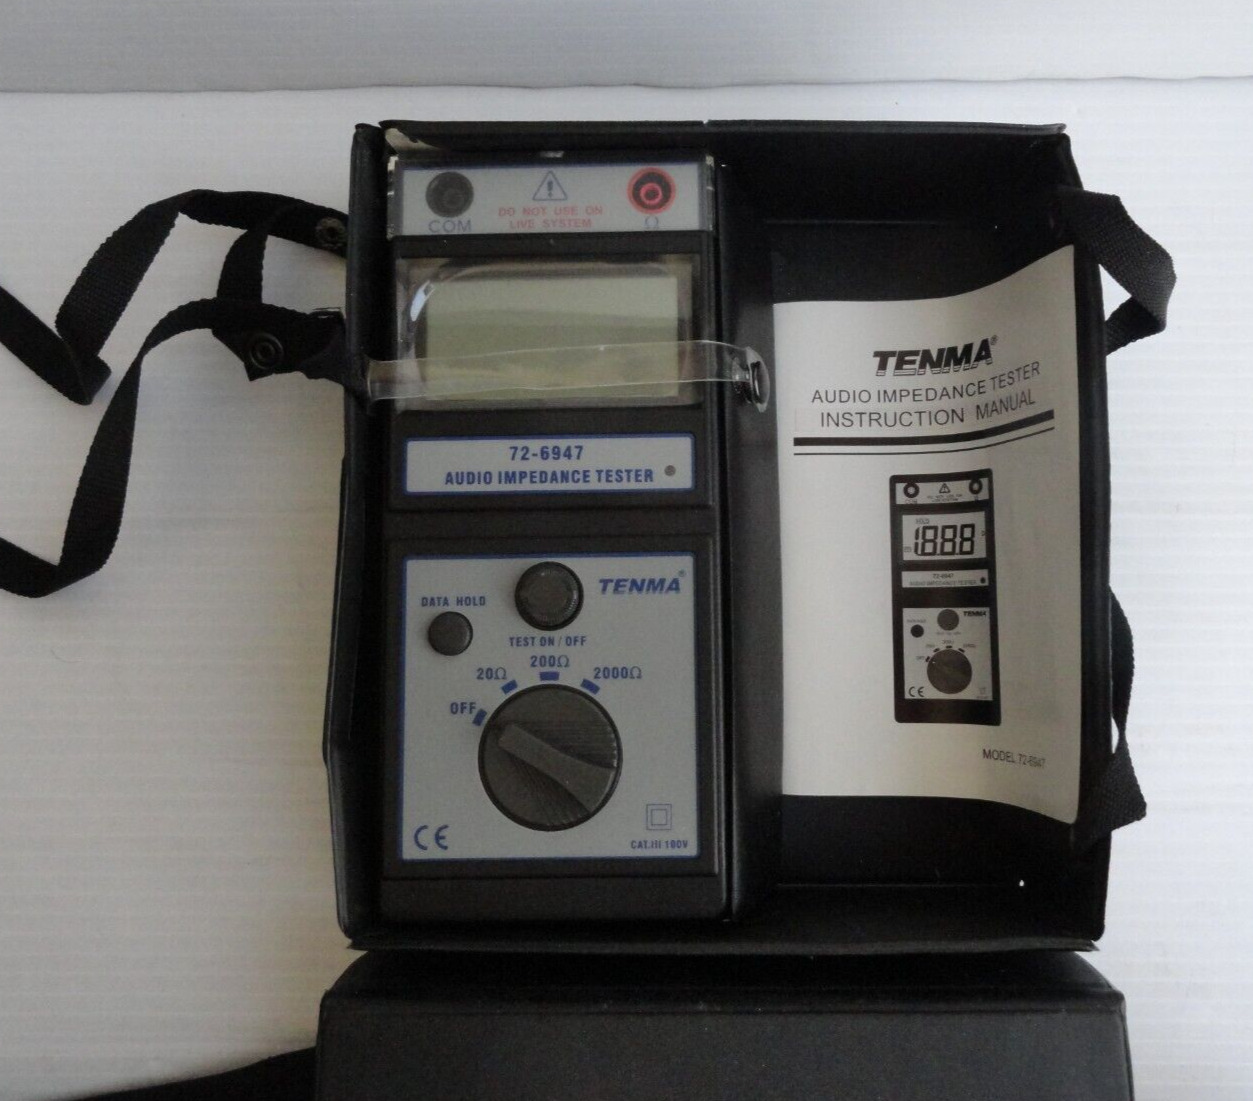 Tenma 72-6947 Audio Impedance Tester